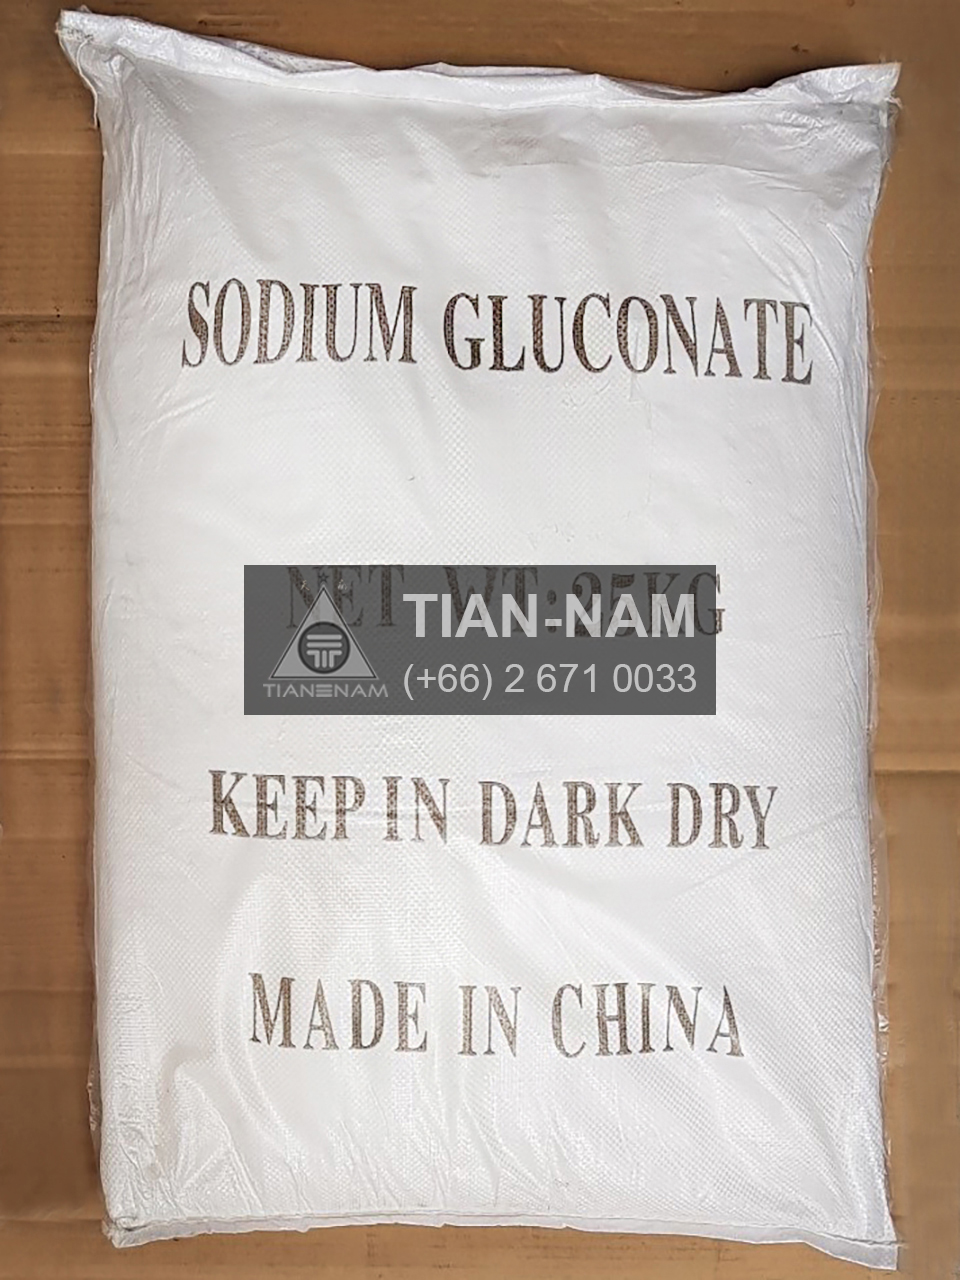 Sodium Gluconate China โซเดียม กูลโคเนท จีน